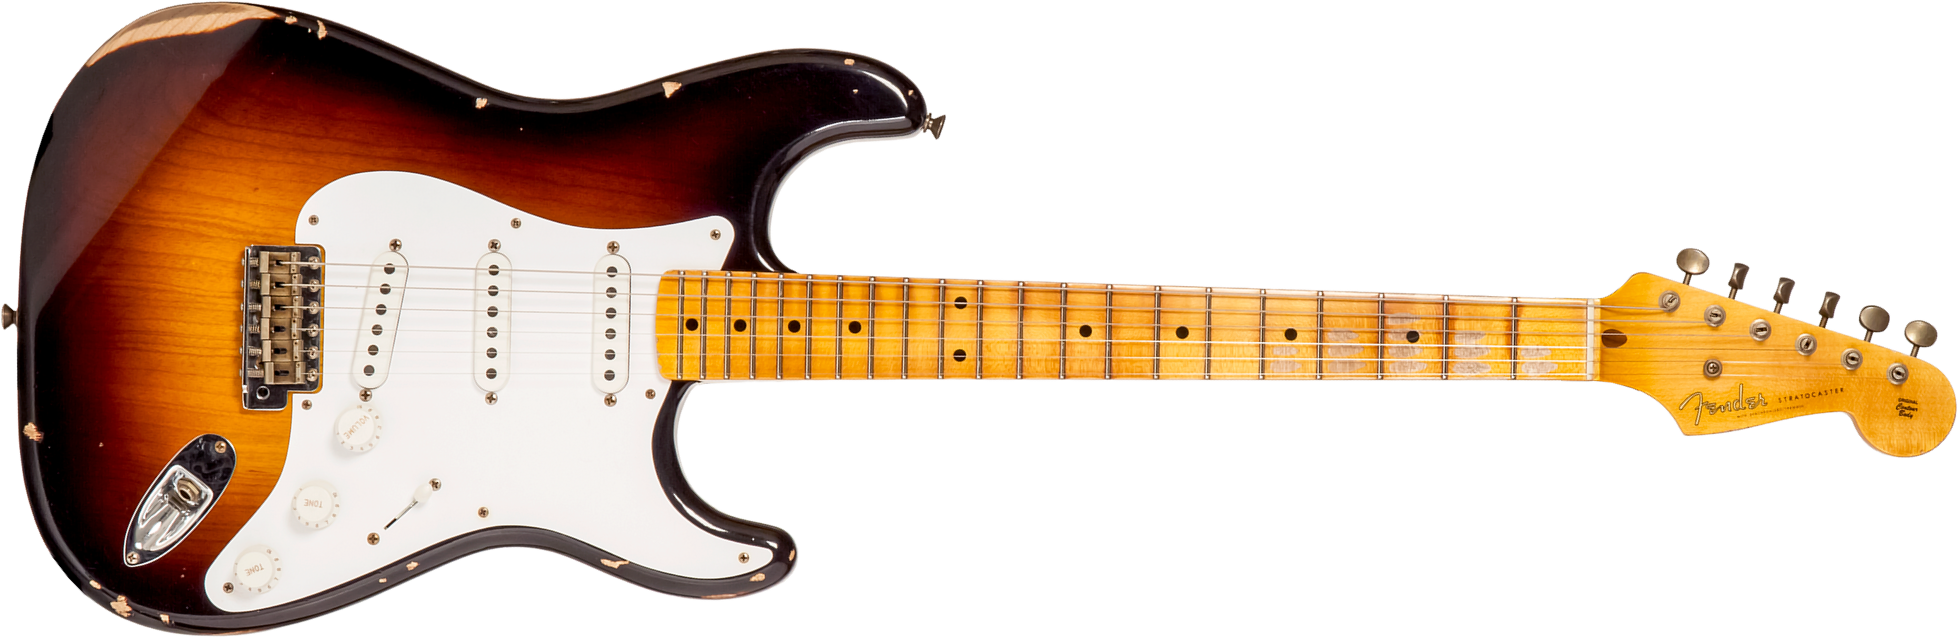 Fender Custom Shop Strat 1954 70th Anniv. 3s Trem Mn #xn4158 - Relic Wide-fade 2-color Sunburst - Elektrische gitaar in Str-vorm - Main picture